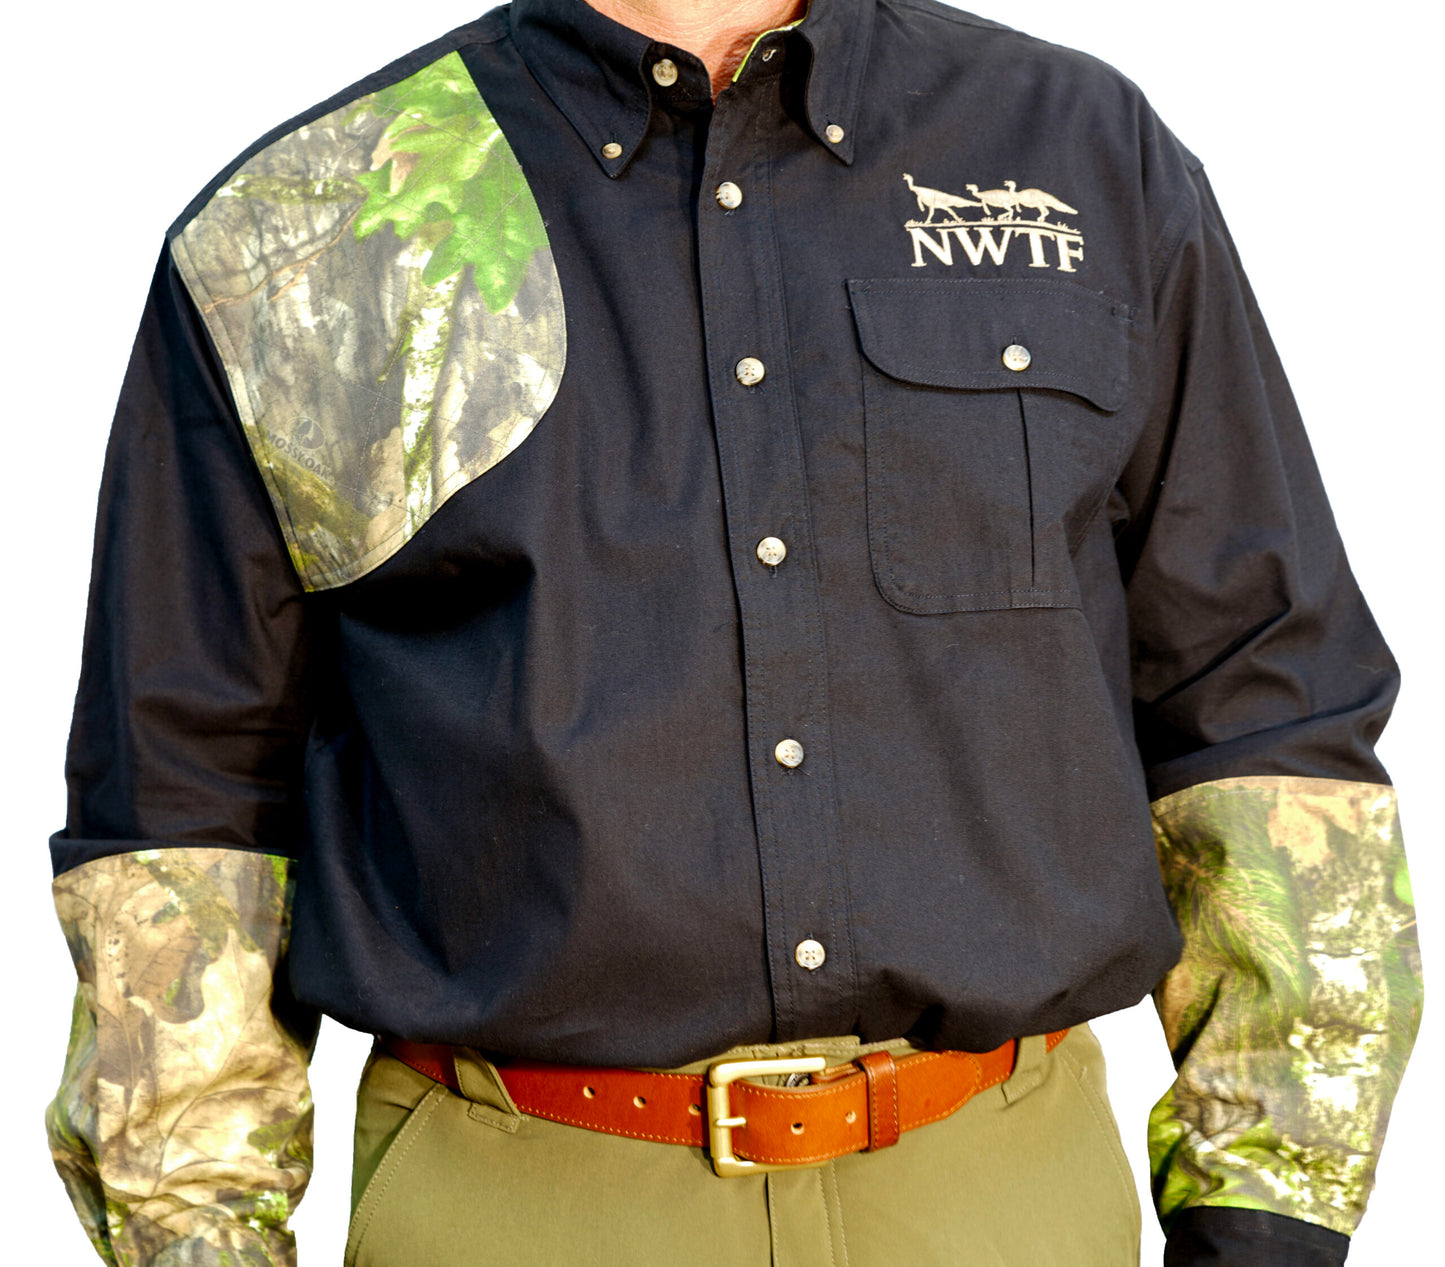 NWTF Long Sleeve Hunting Shirt